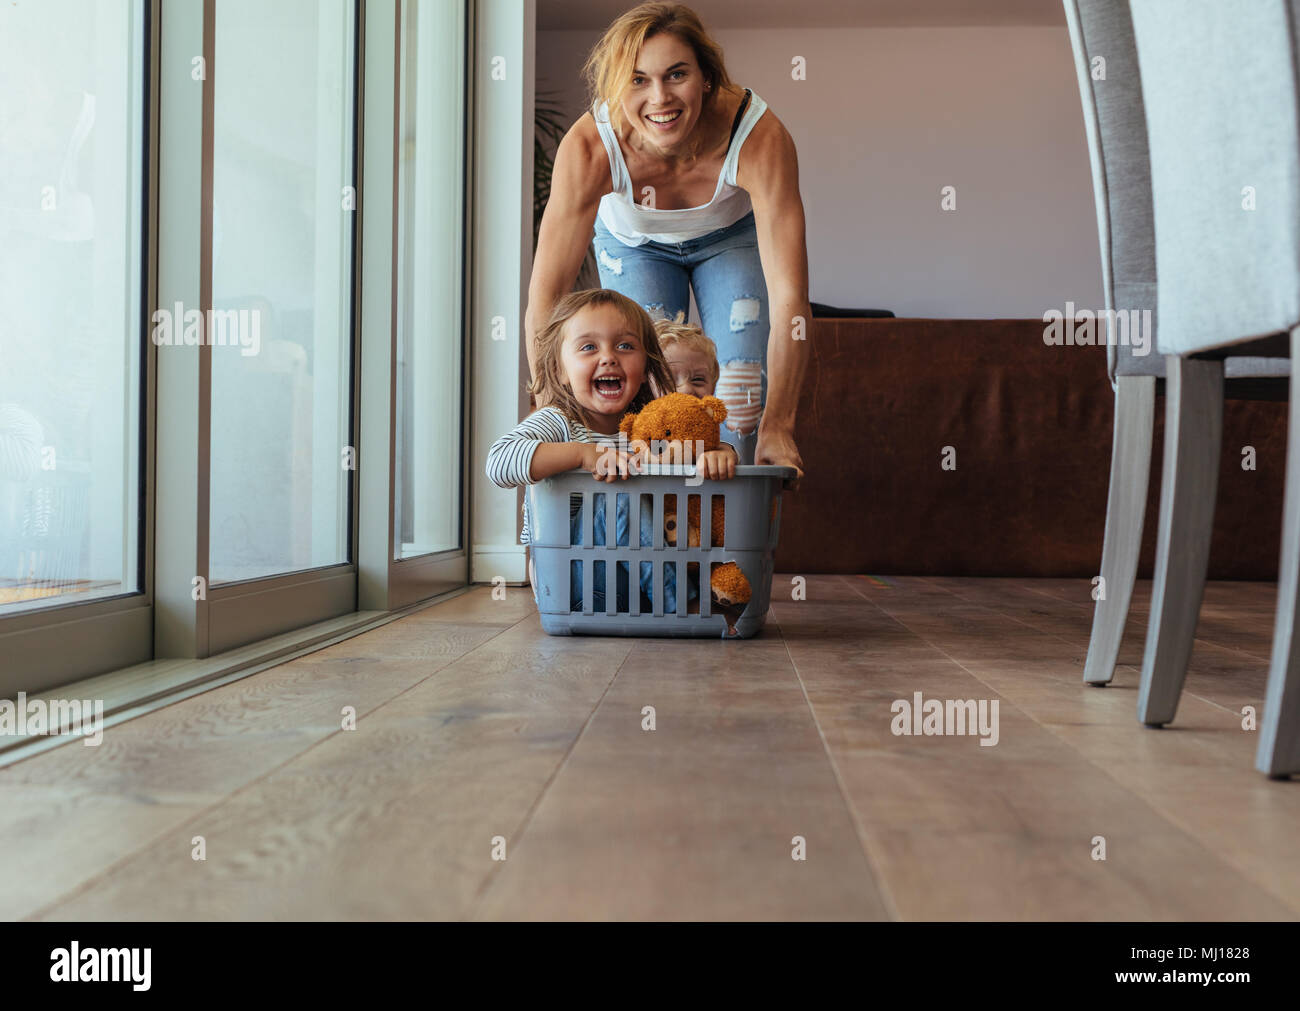 Happy young woman pushing kids sitting in washing basket. Children enjoying laundry basket ride at home. Stock Photo